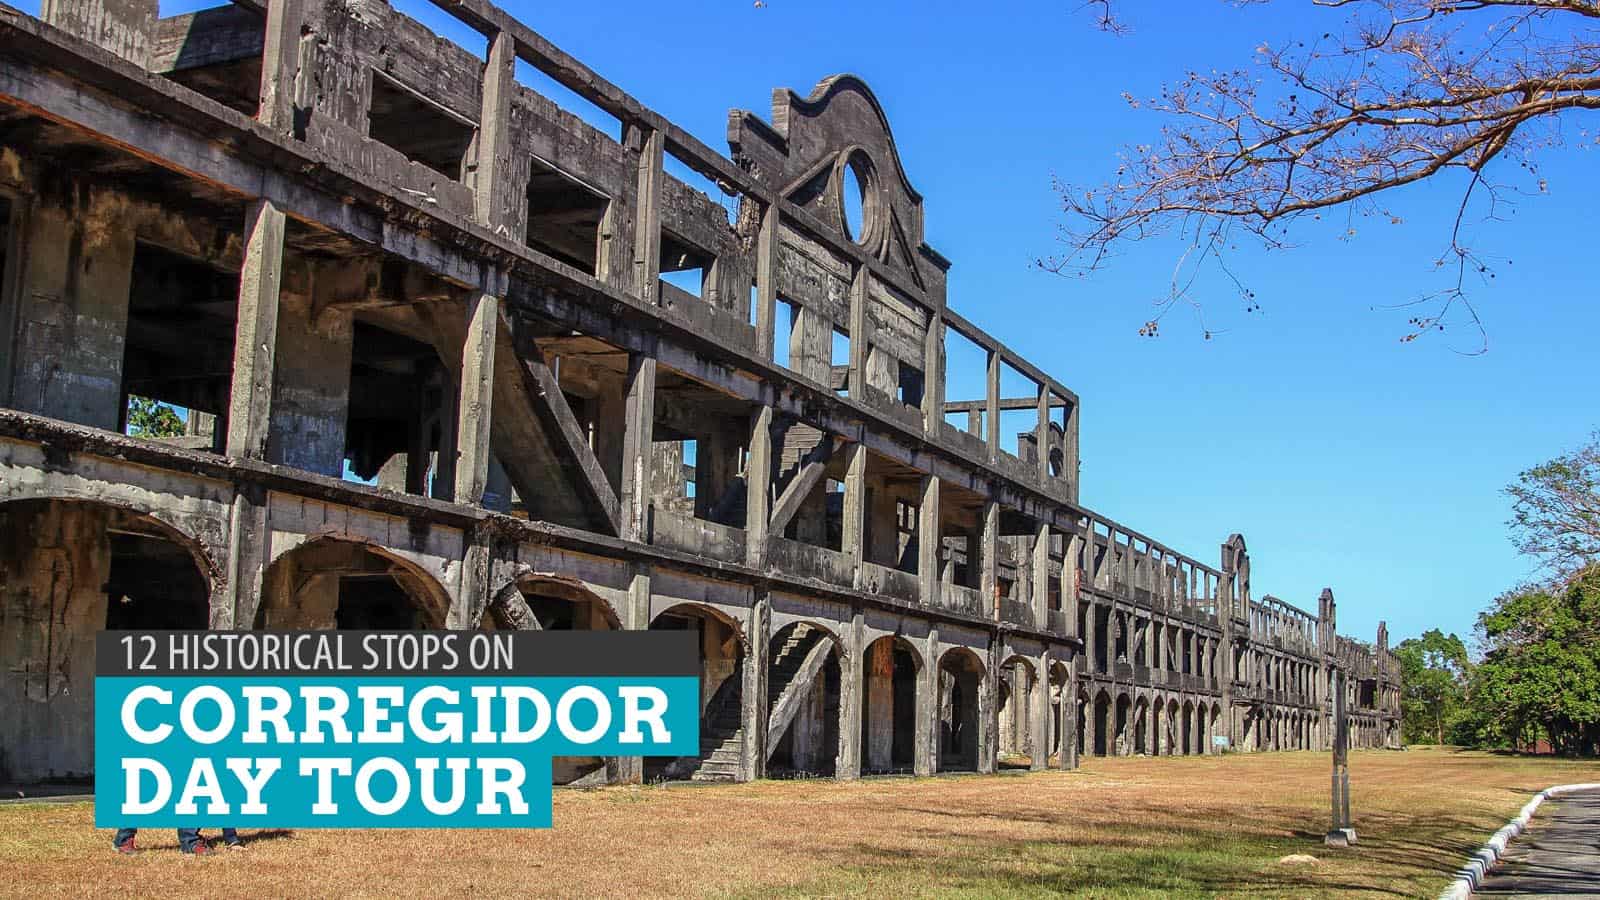 CORREGIDOR DAY TOUR 12 Historic Sites to Visit The Poor Traveler